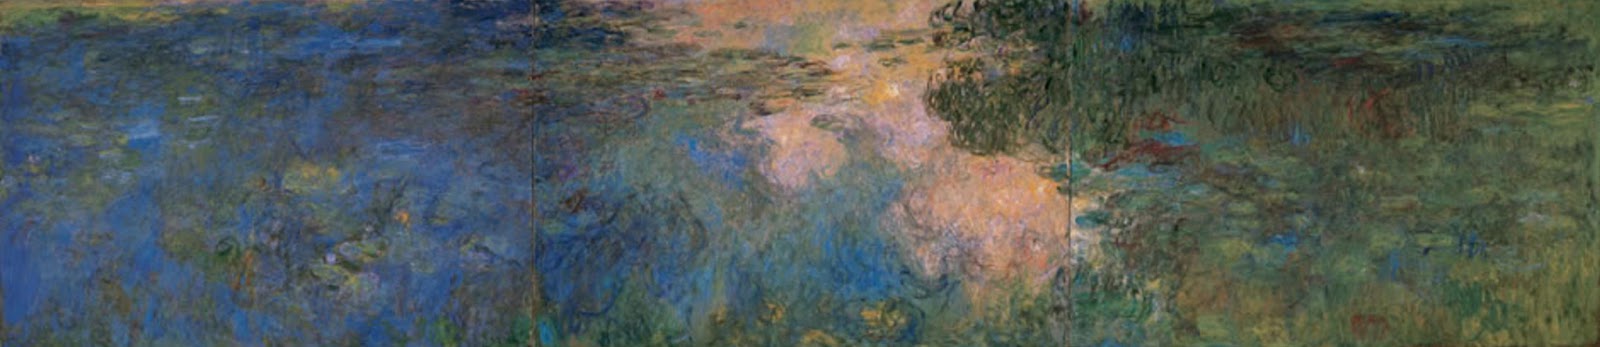 Claude+Monet-1840-1926 (420).jpg